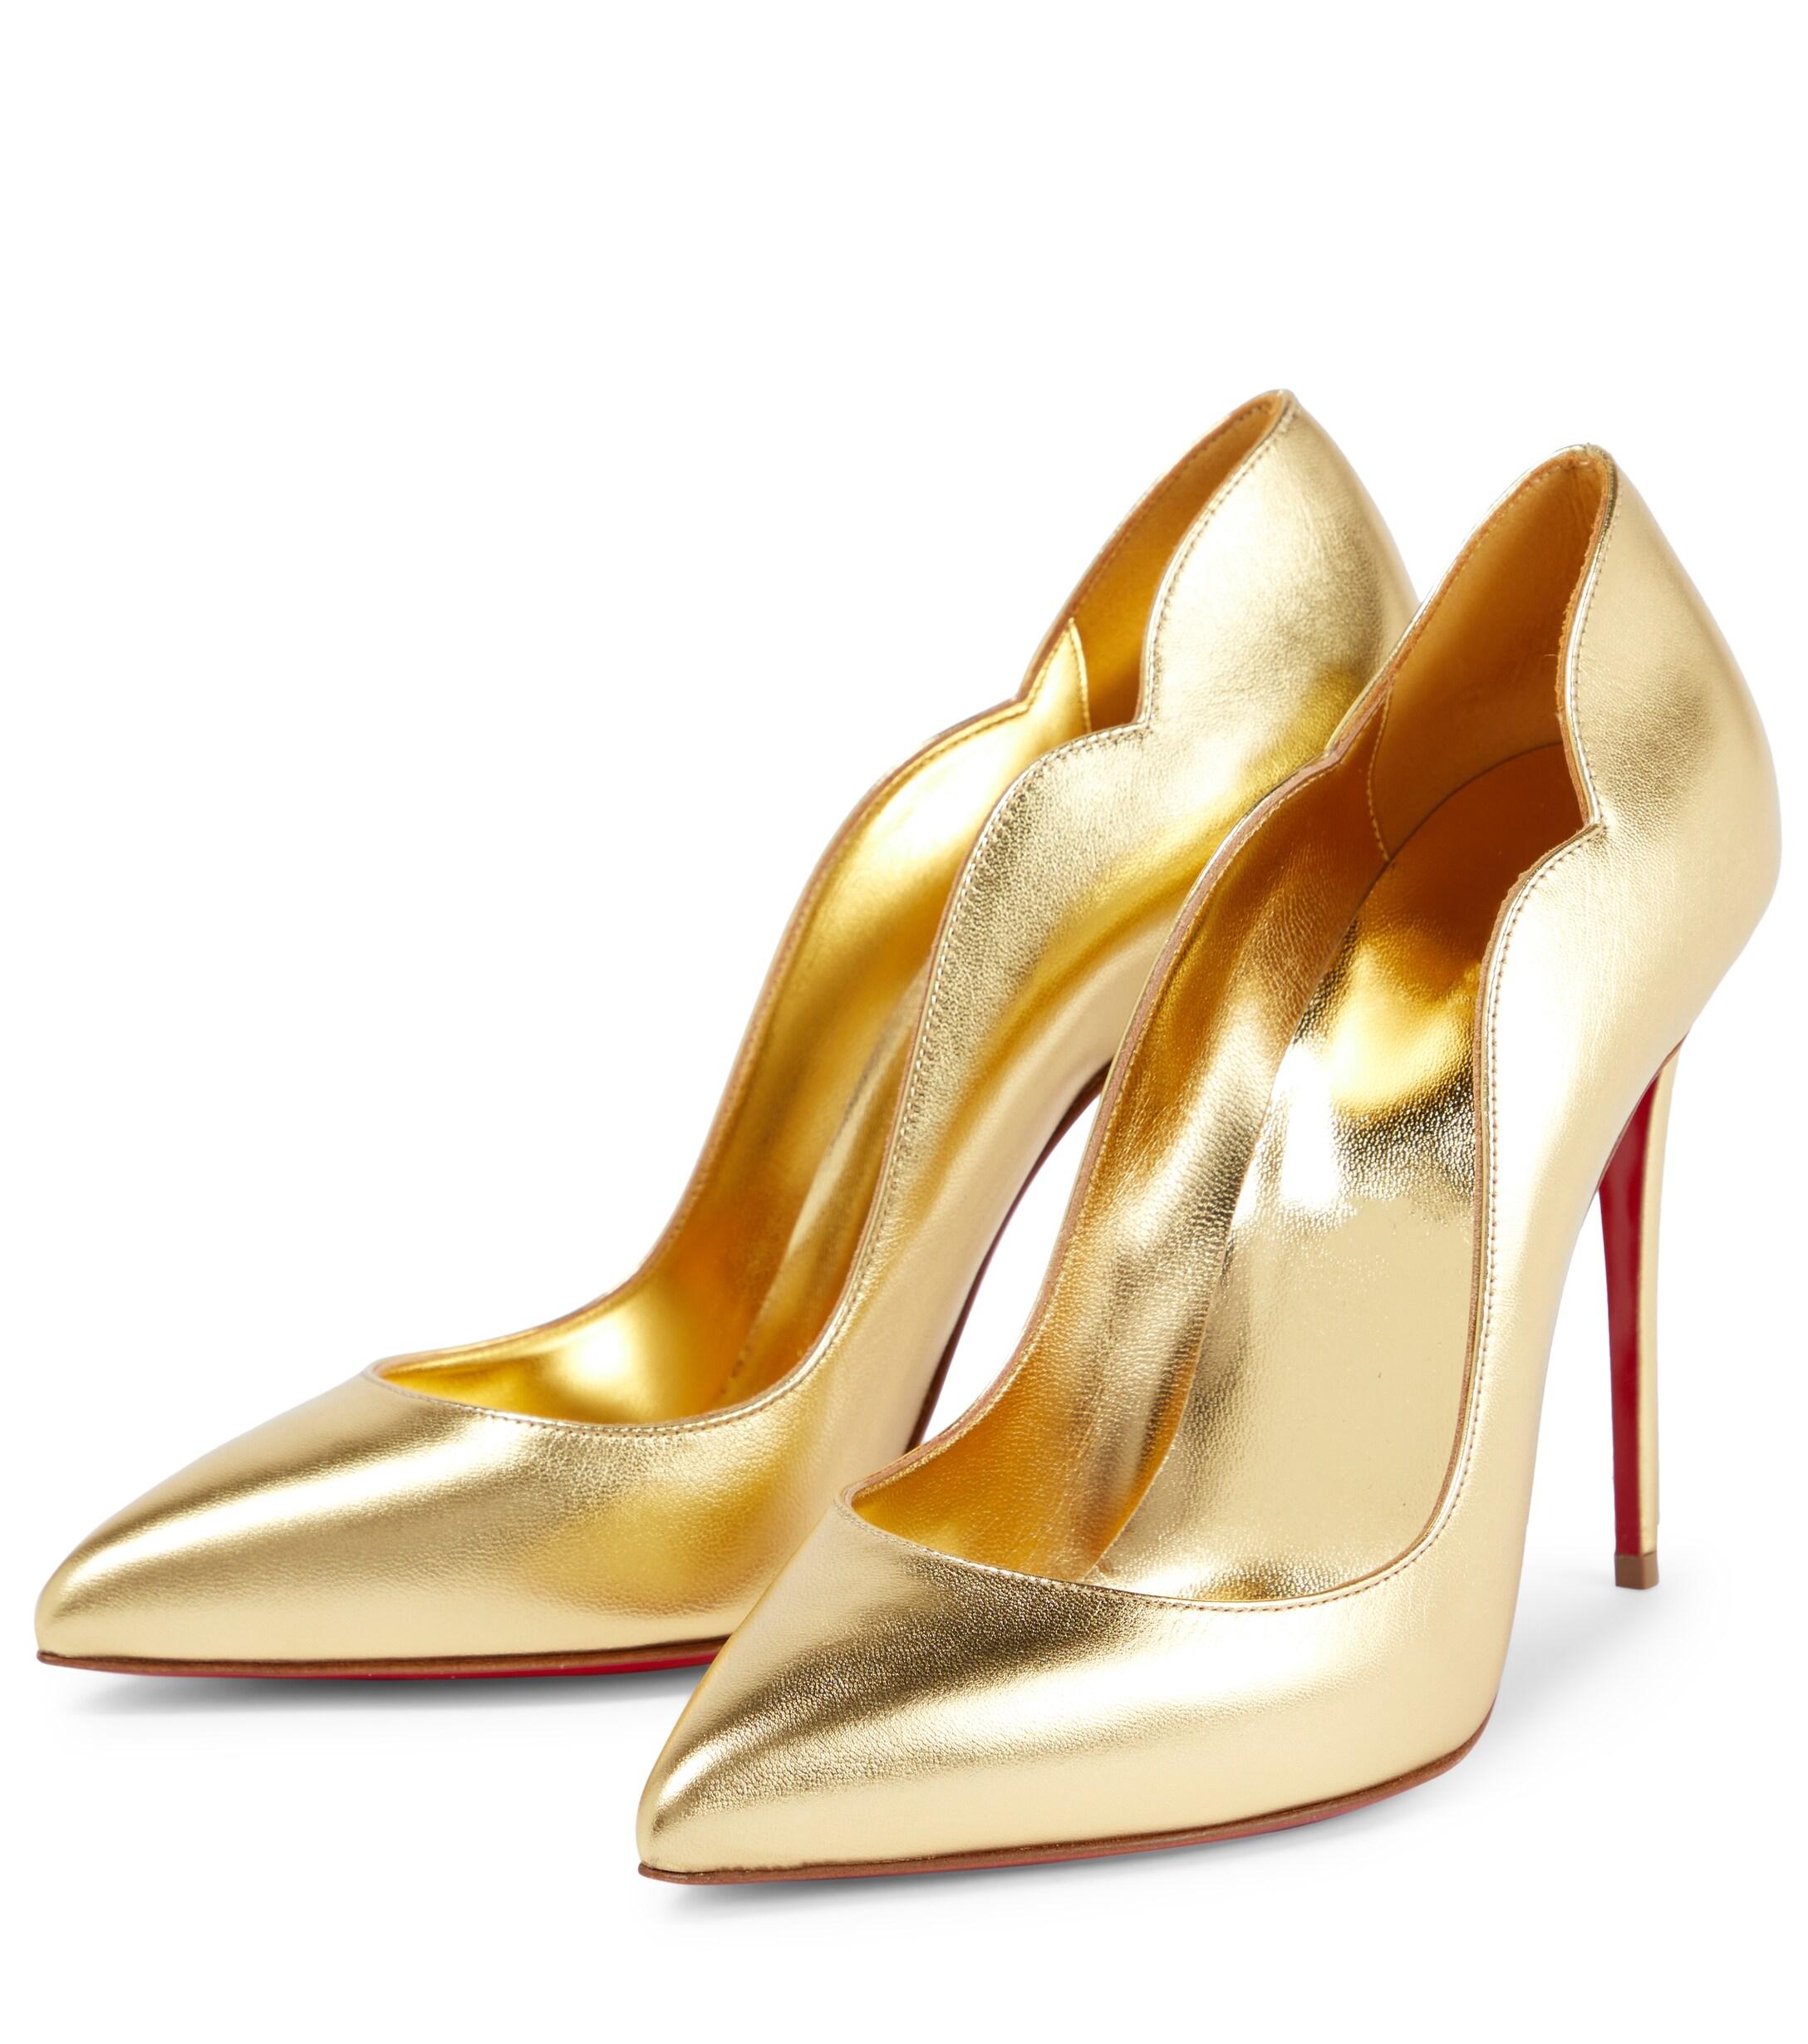 New Christian Louboutin HOT CHICK 100 Glitter 37 Heel Bride Wedding Shoes  $795